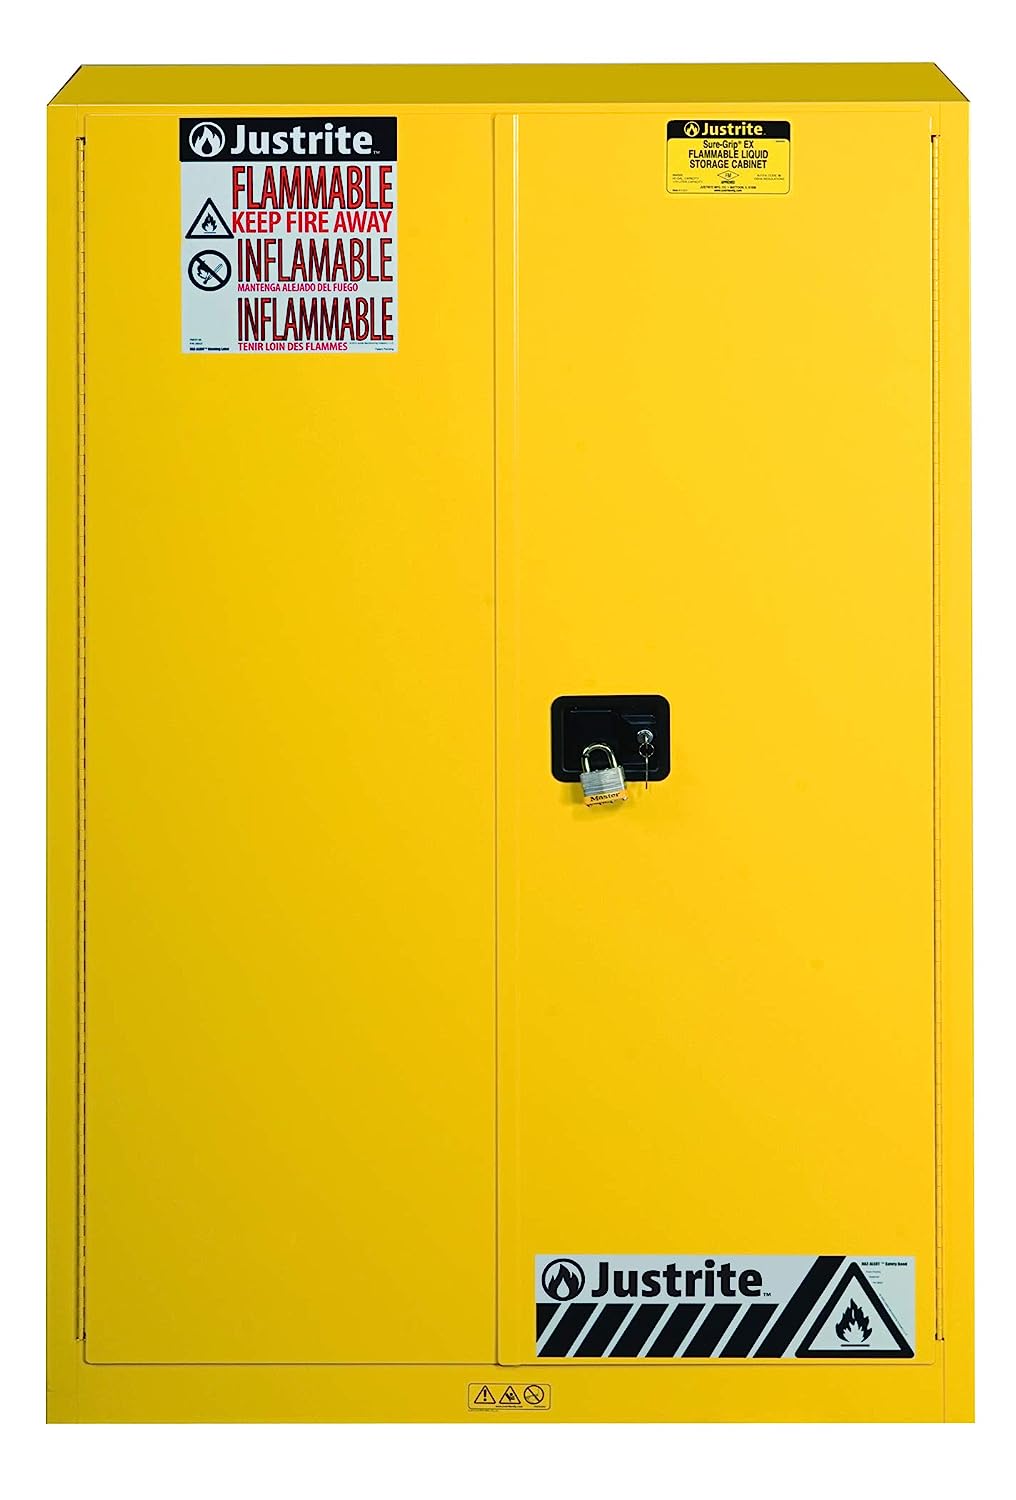 JUSTRITE Sure-Grip EX Standard Safety Cabinet, 43w x 18d x 65h (Slight Damage) - $400